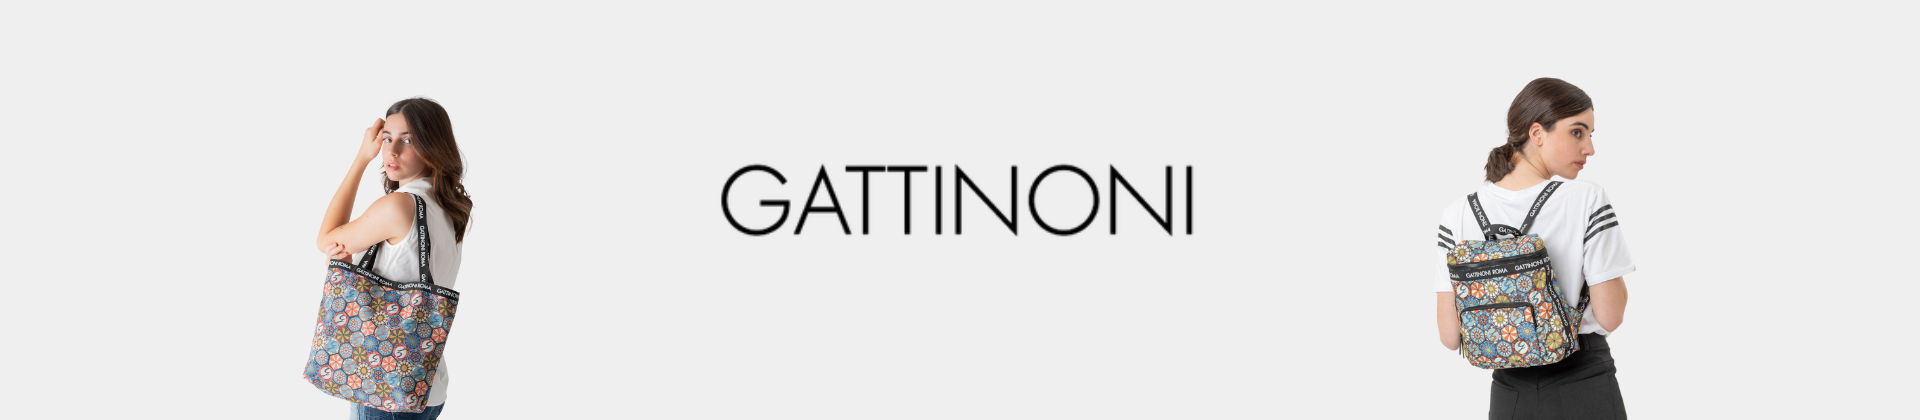 Gattinoni Bags Shop Online Women | YoungShoesSalerno.it